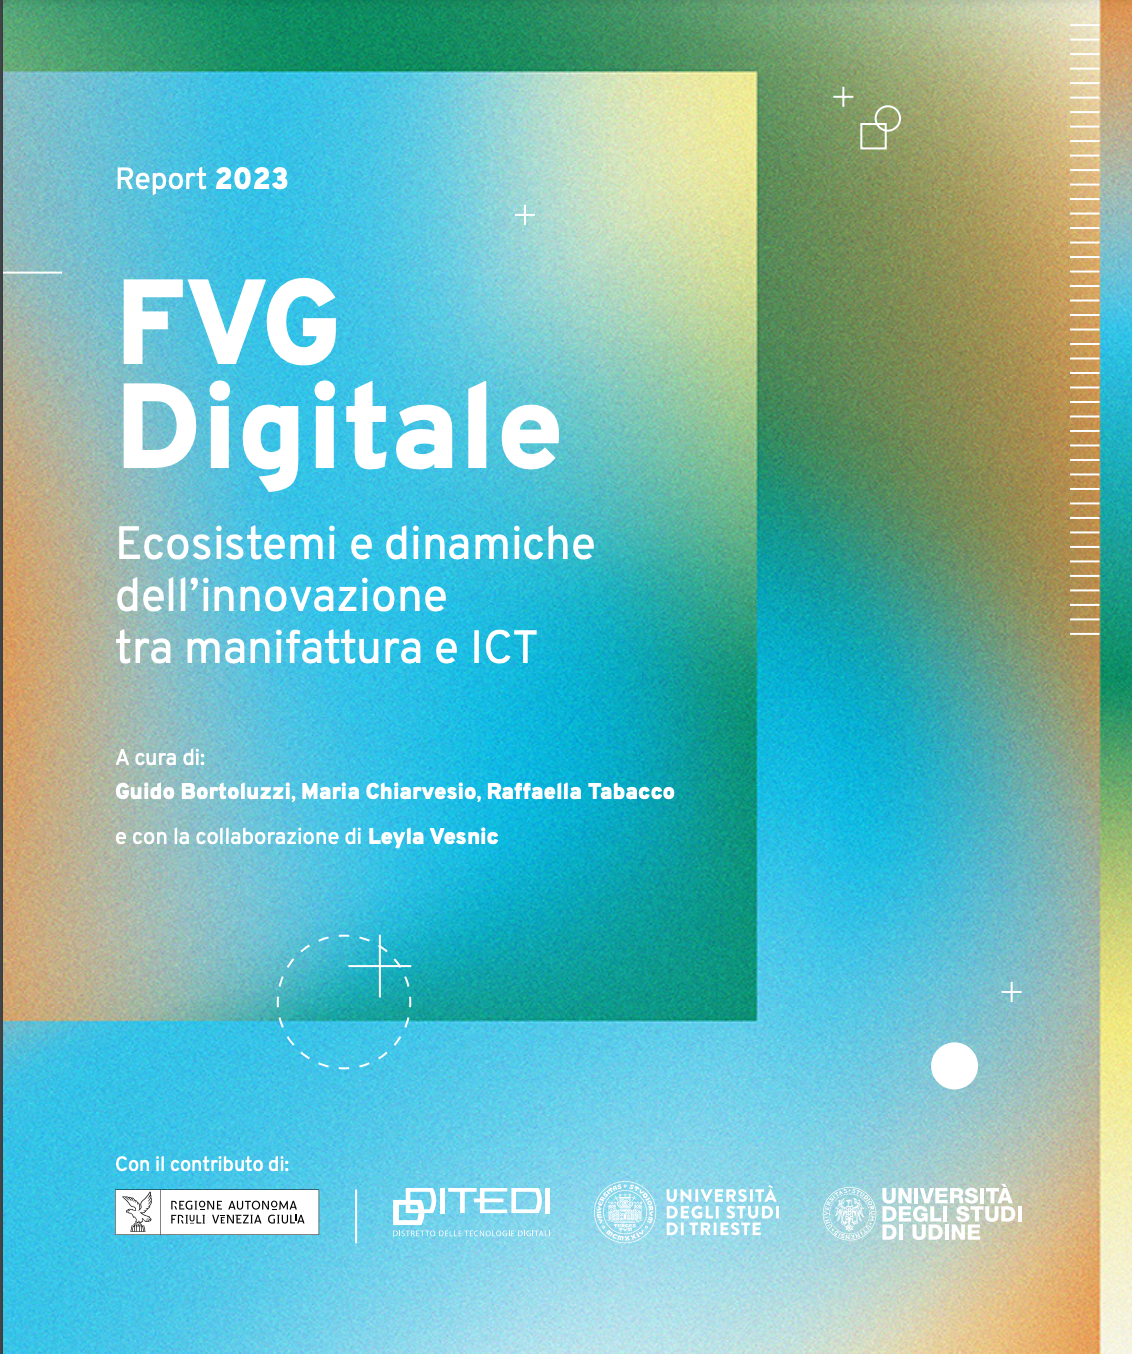 FVG Digitale